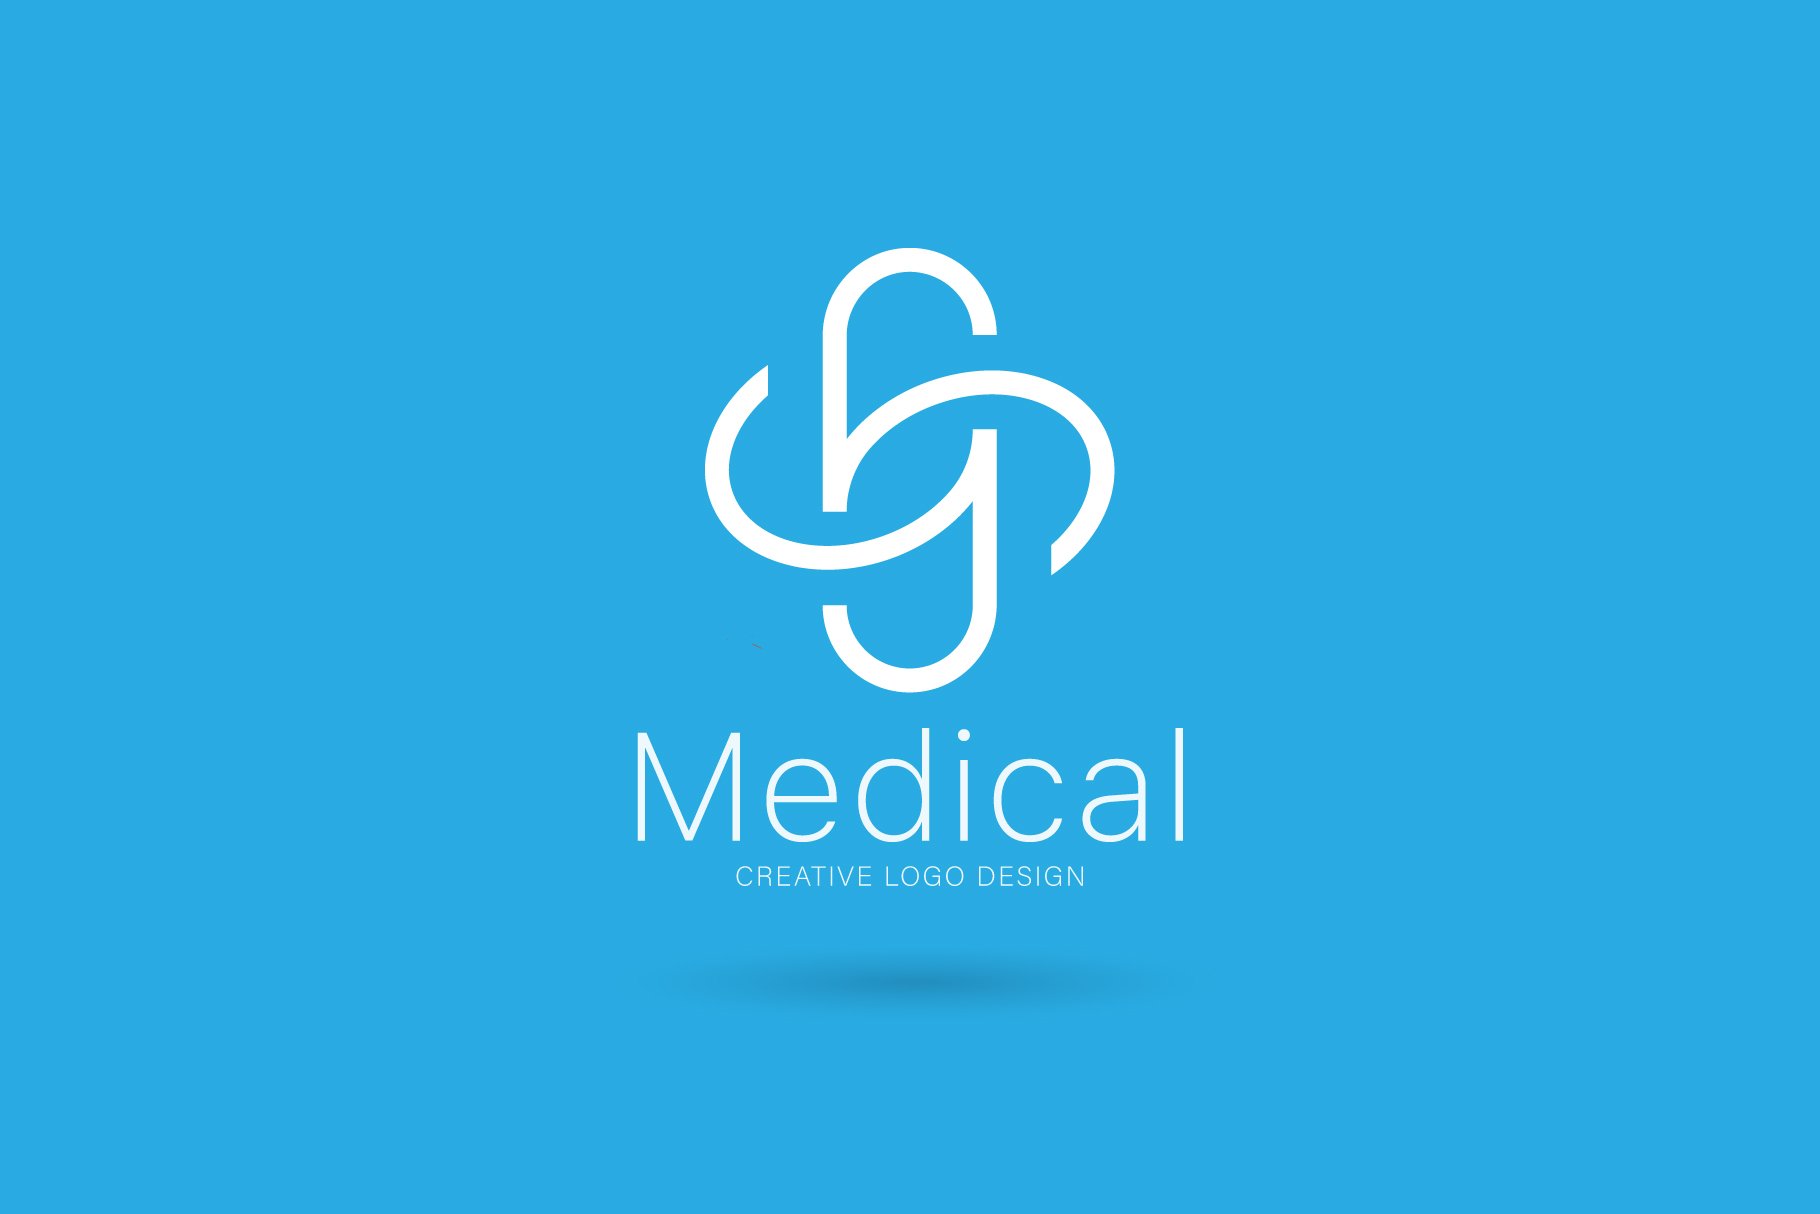 Medical logo preview image.